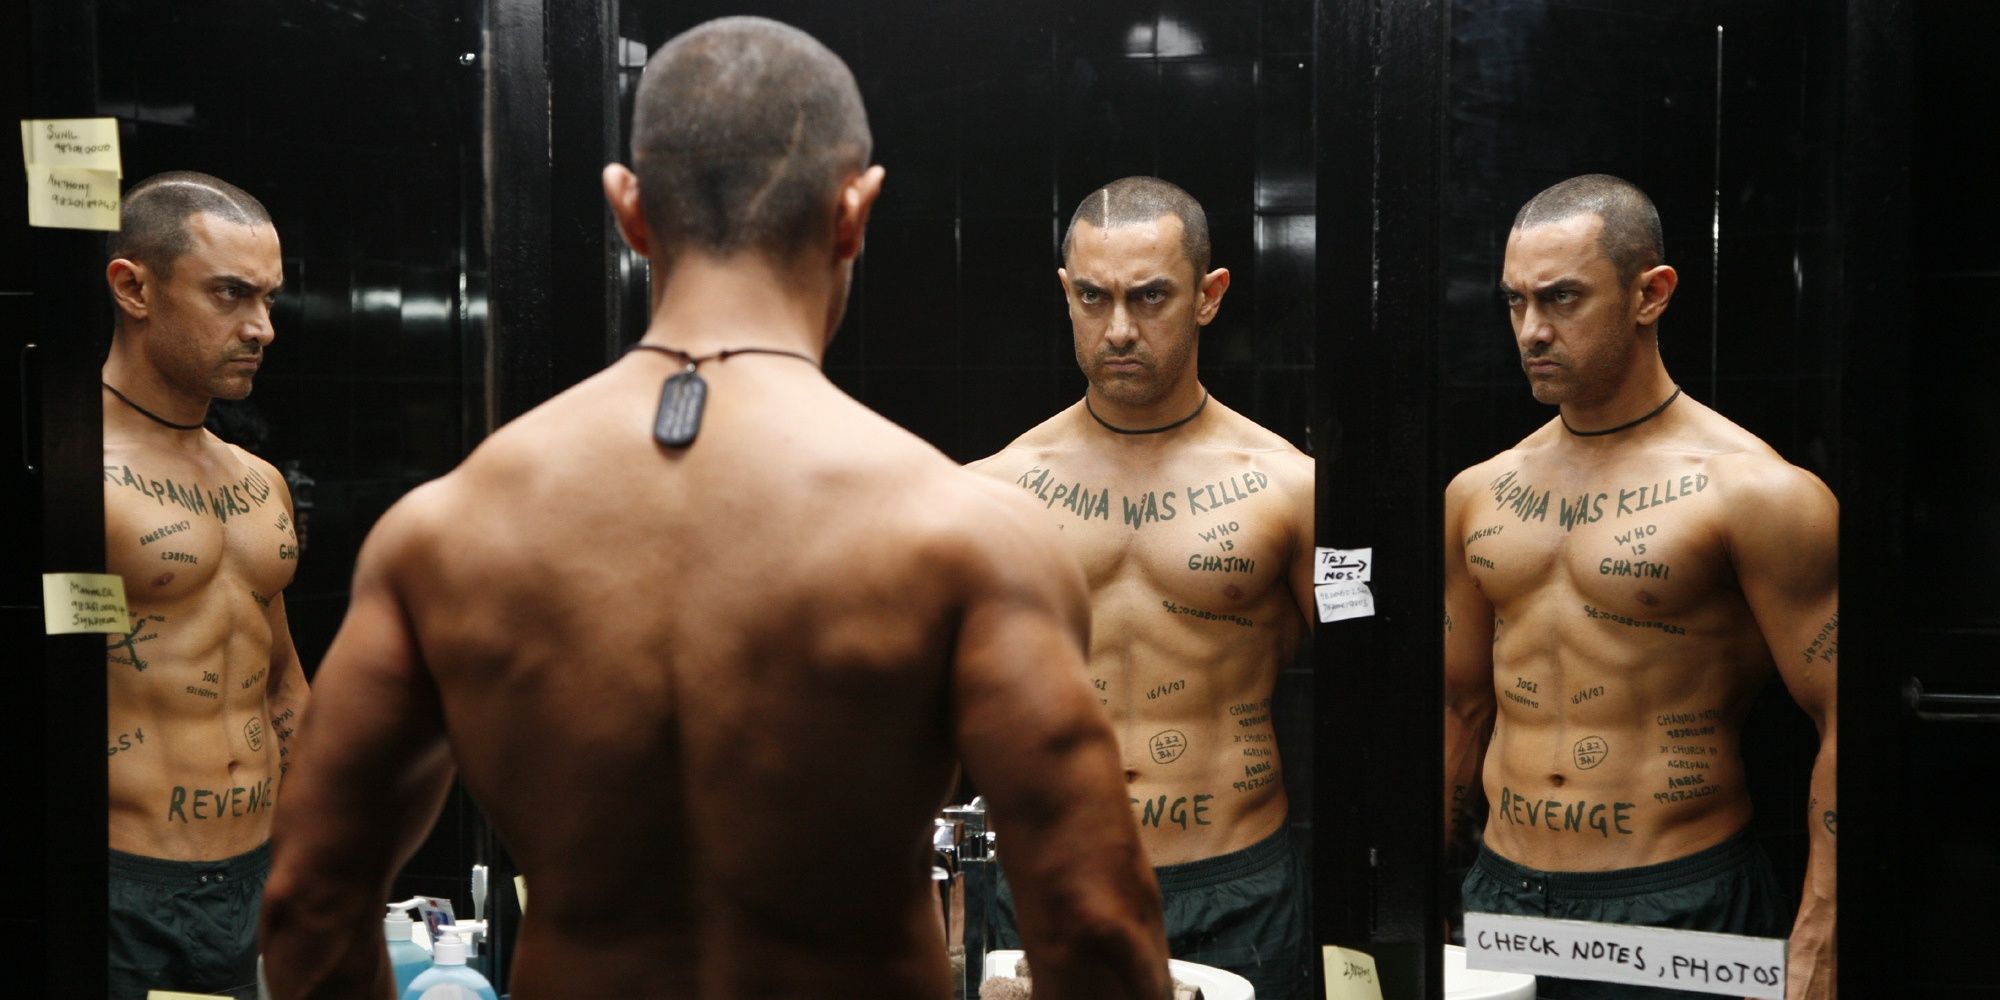 Ghajini, Sanjay Looking in mirrors, shirtless, tattoos, revenge